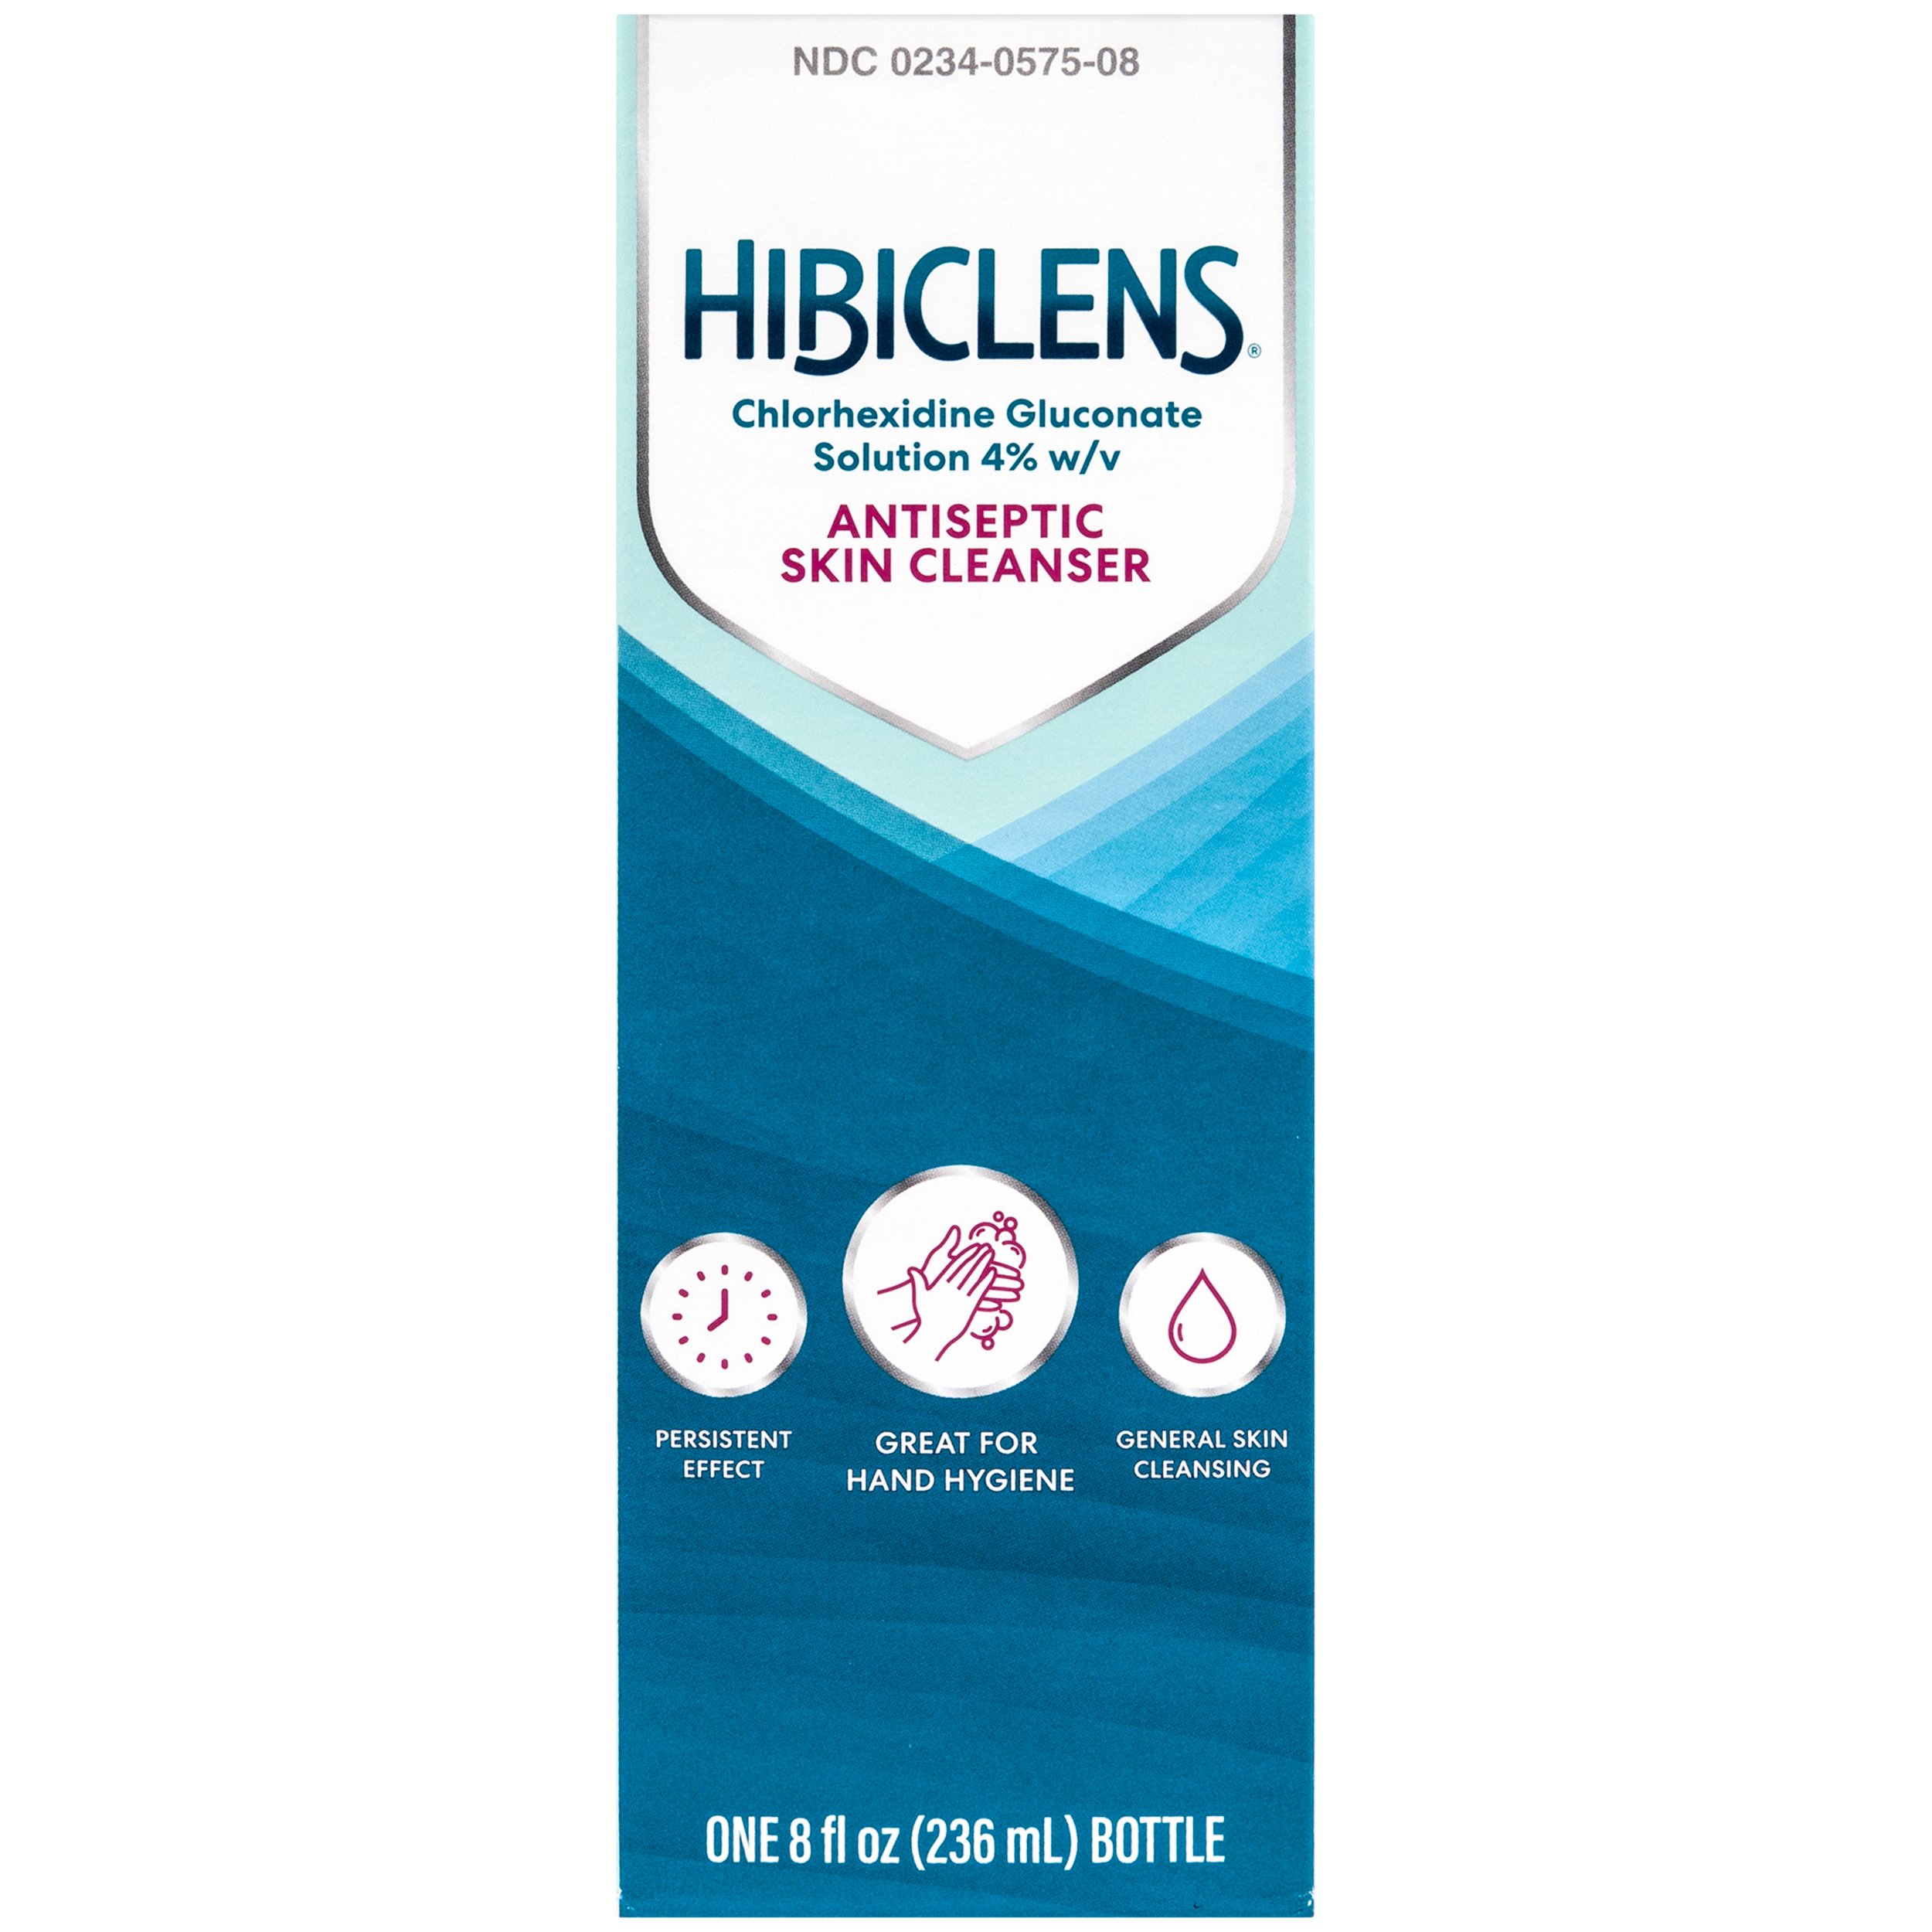 Hibiclens Antiseptic Skin Cleanser - Shop Medicines & Treatments at H-E-B